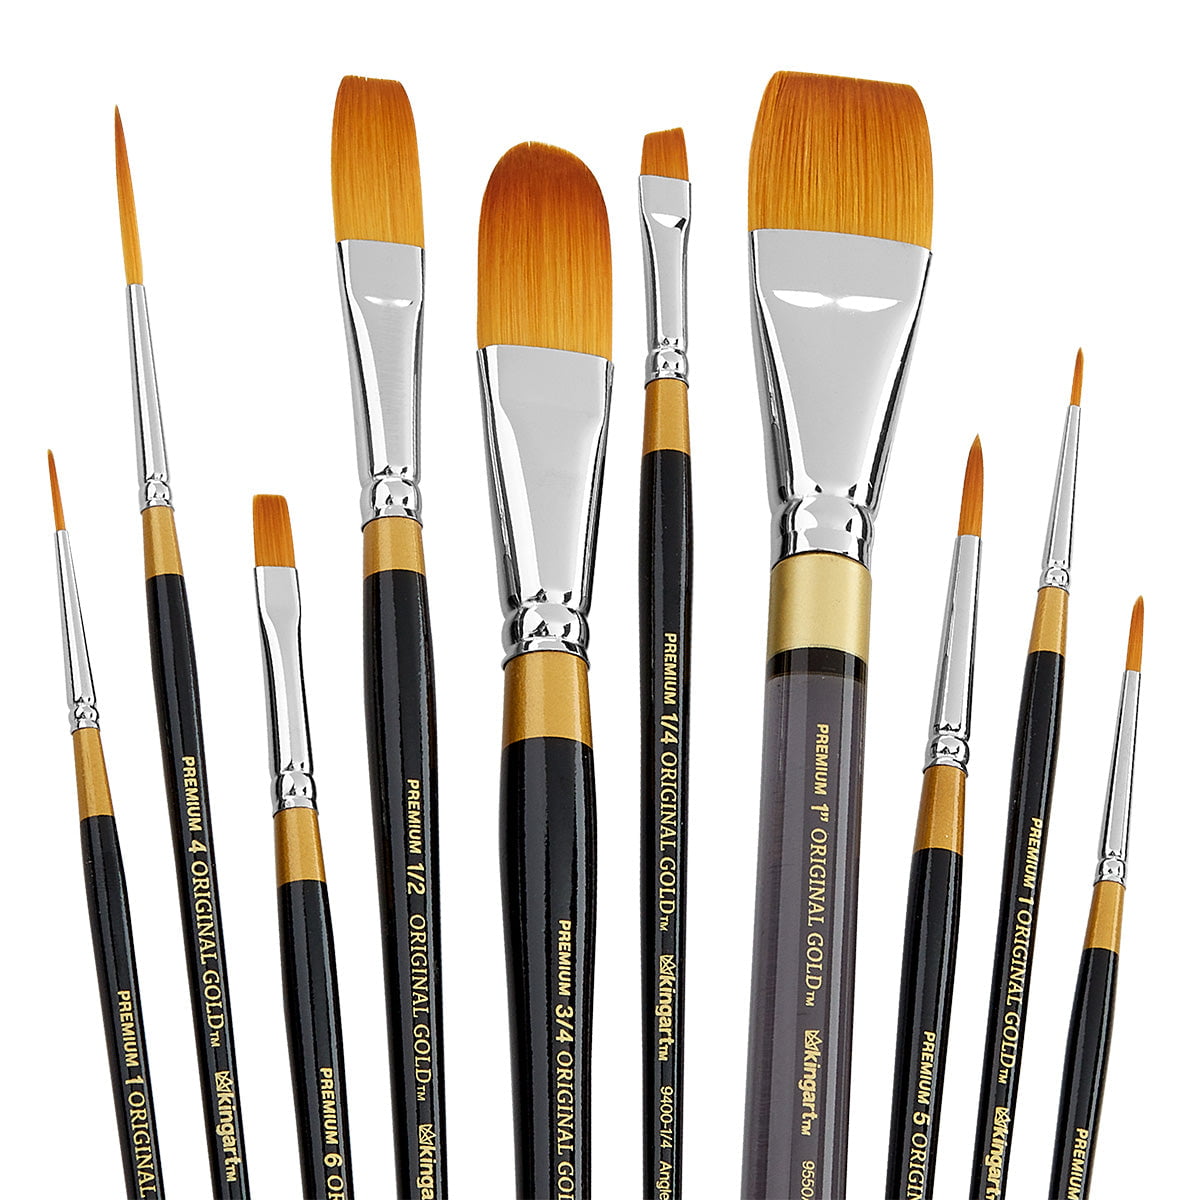 KINGART® Original Gold® 9050 Script Liner Series Premium Golden Taklon  Multimedia Artist Brushes, Set of 5